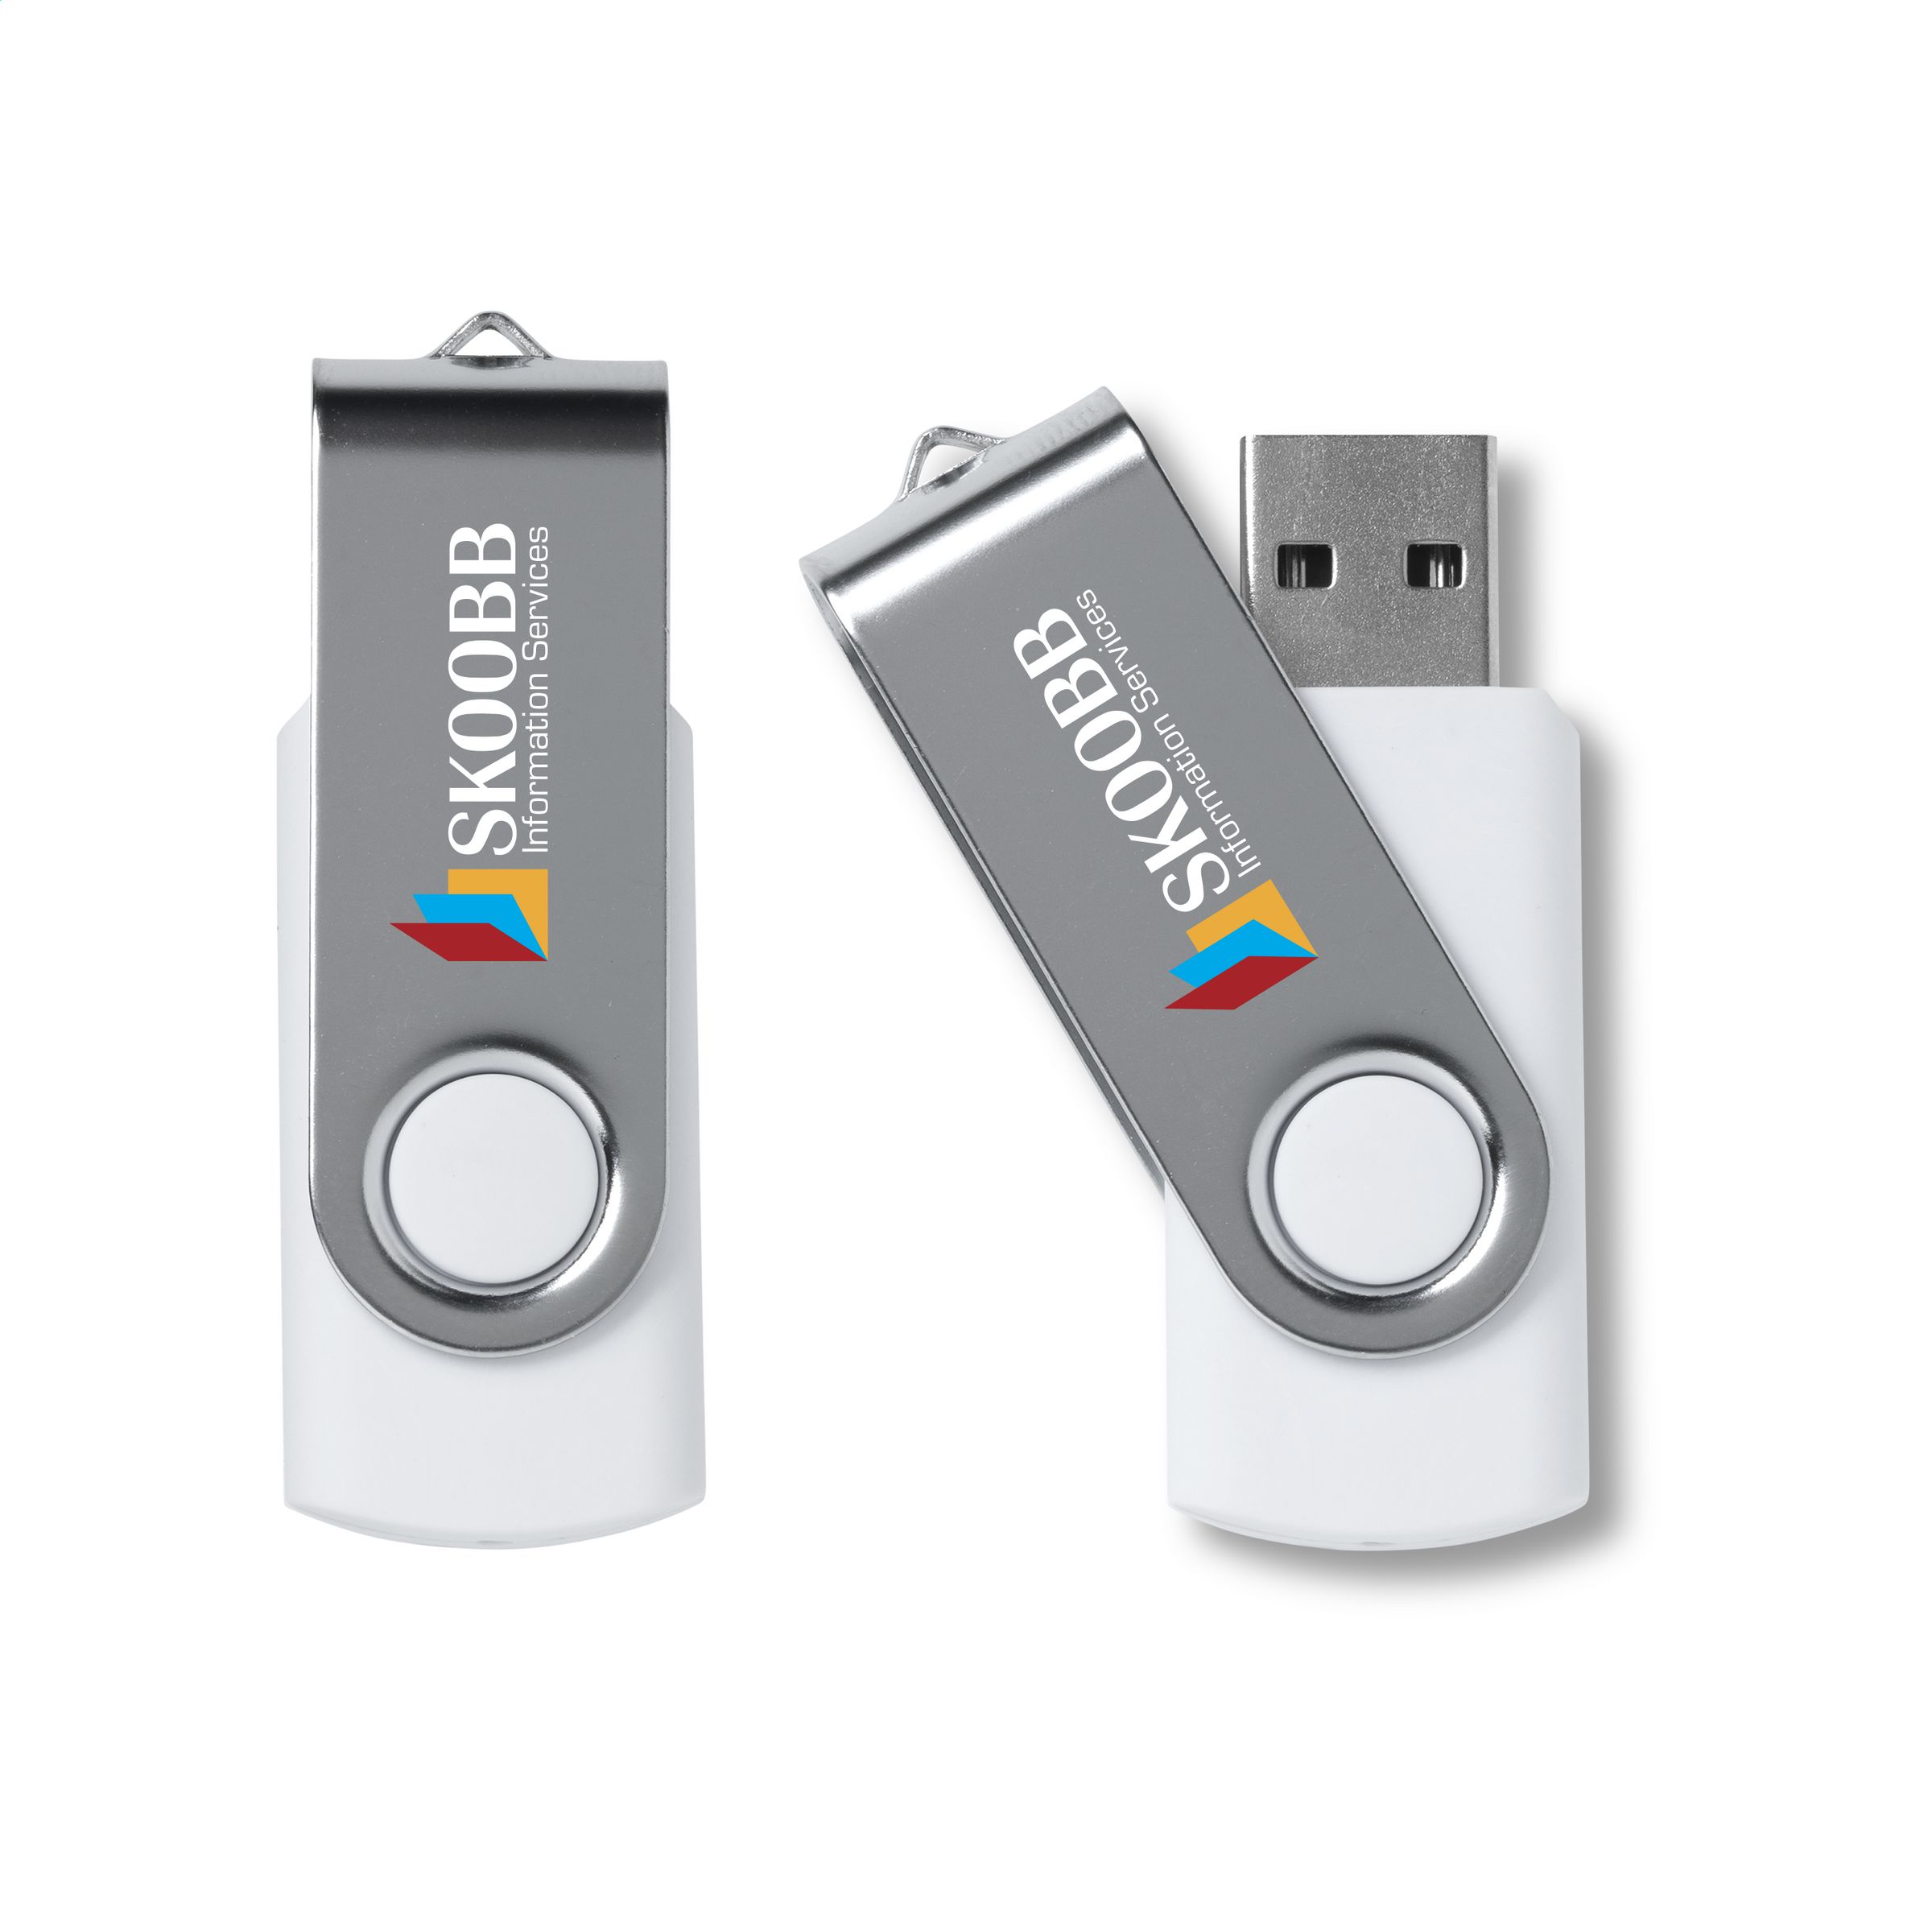 StorageMate USB 2.0 - Montepulciano